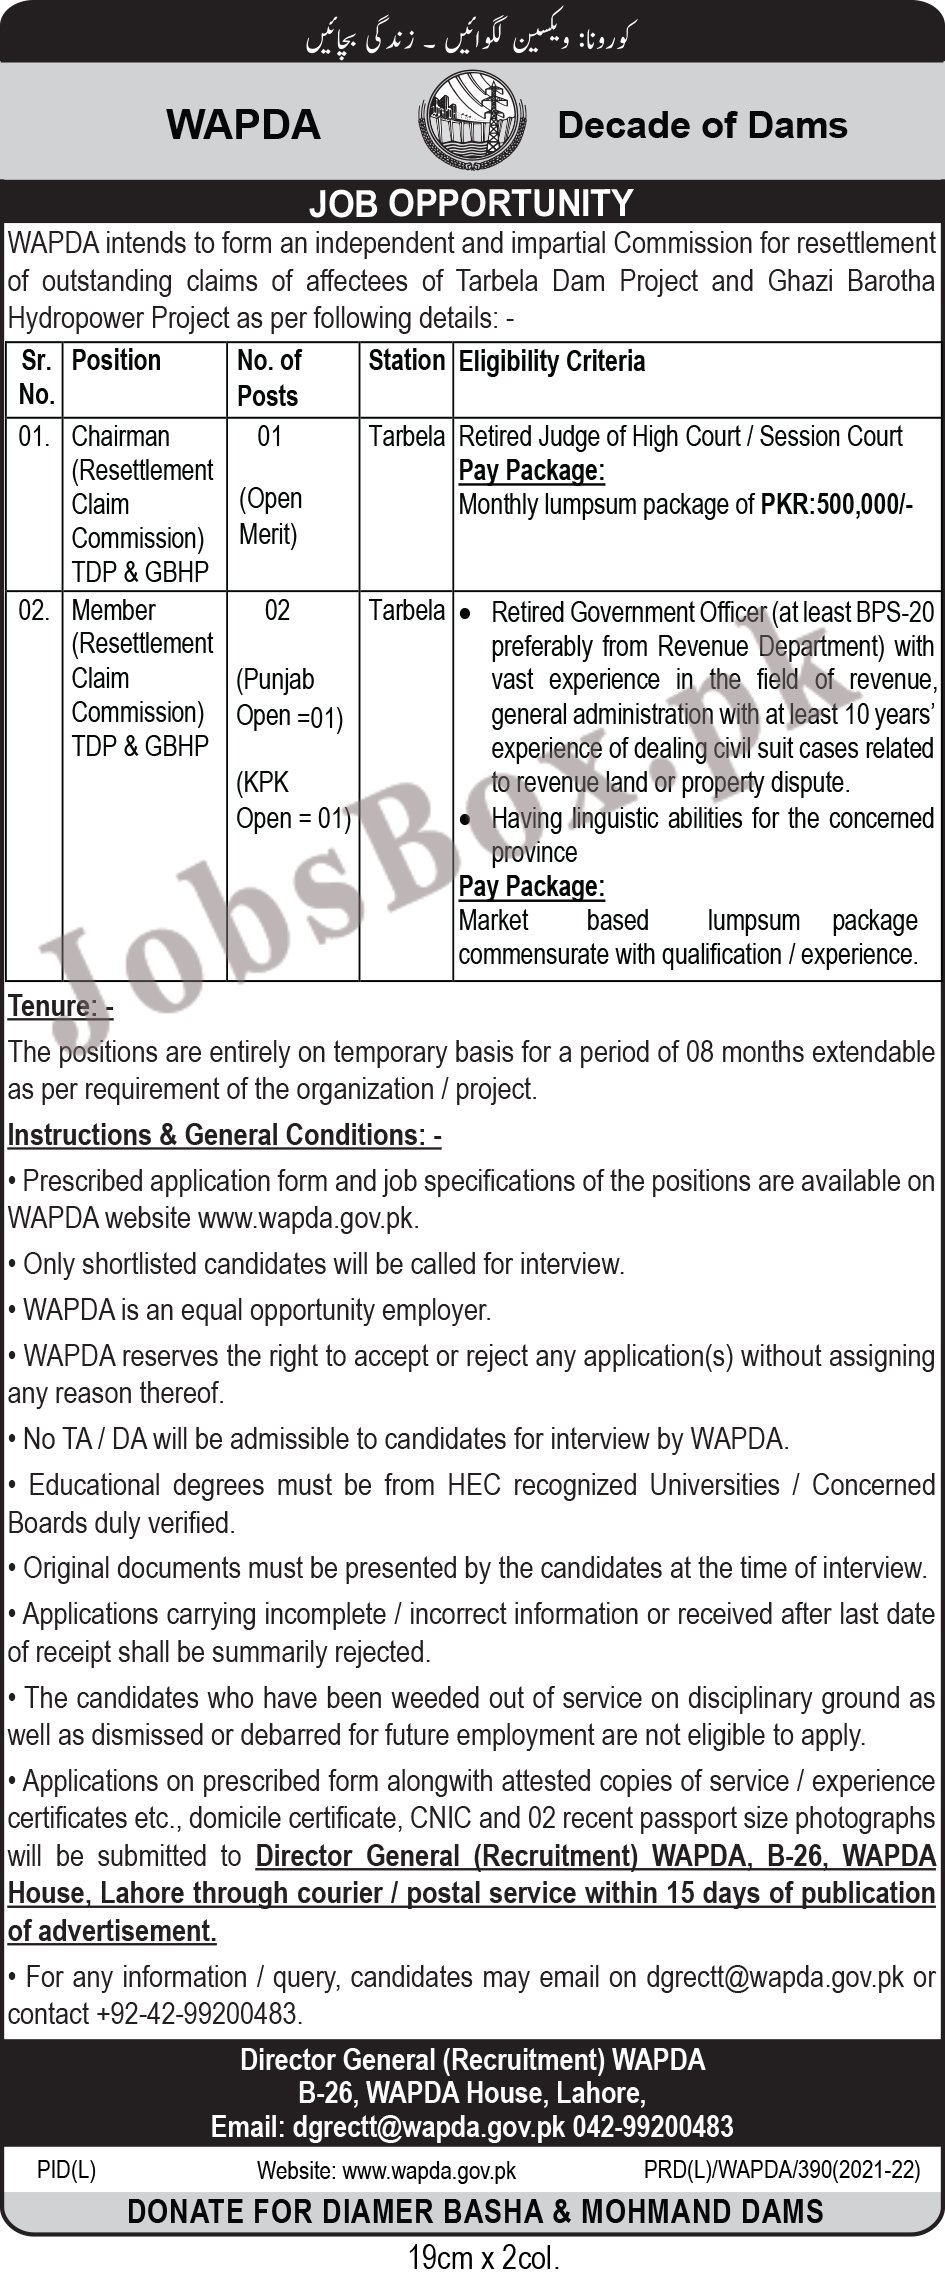 WAPDA jobs 2022 Download Application Form online at www.wapda.gov.pk